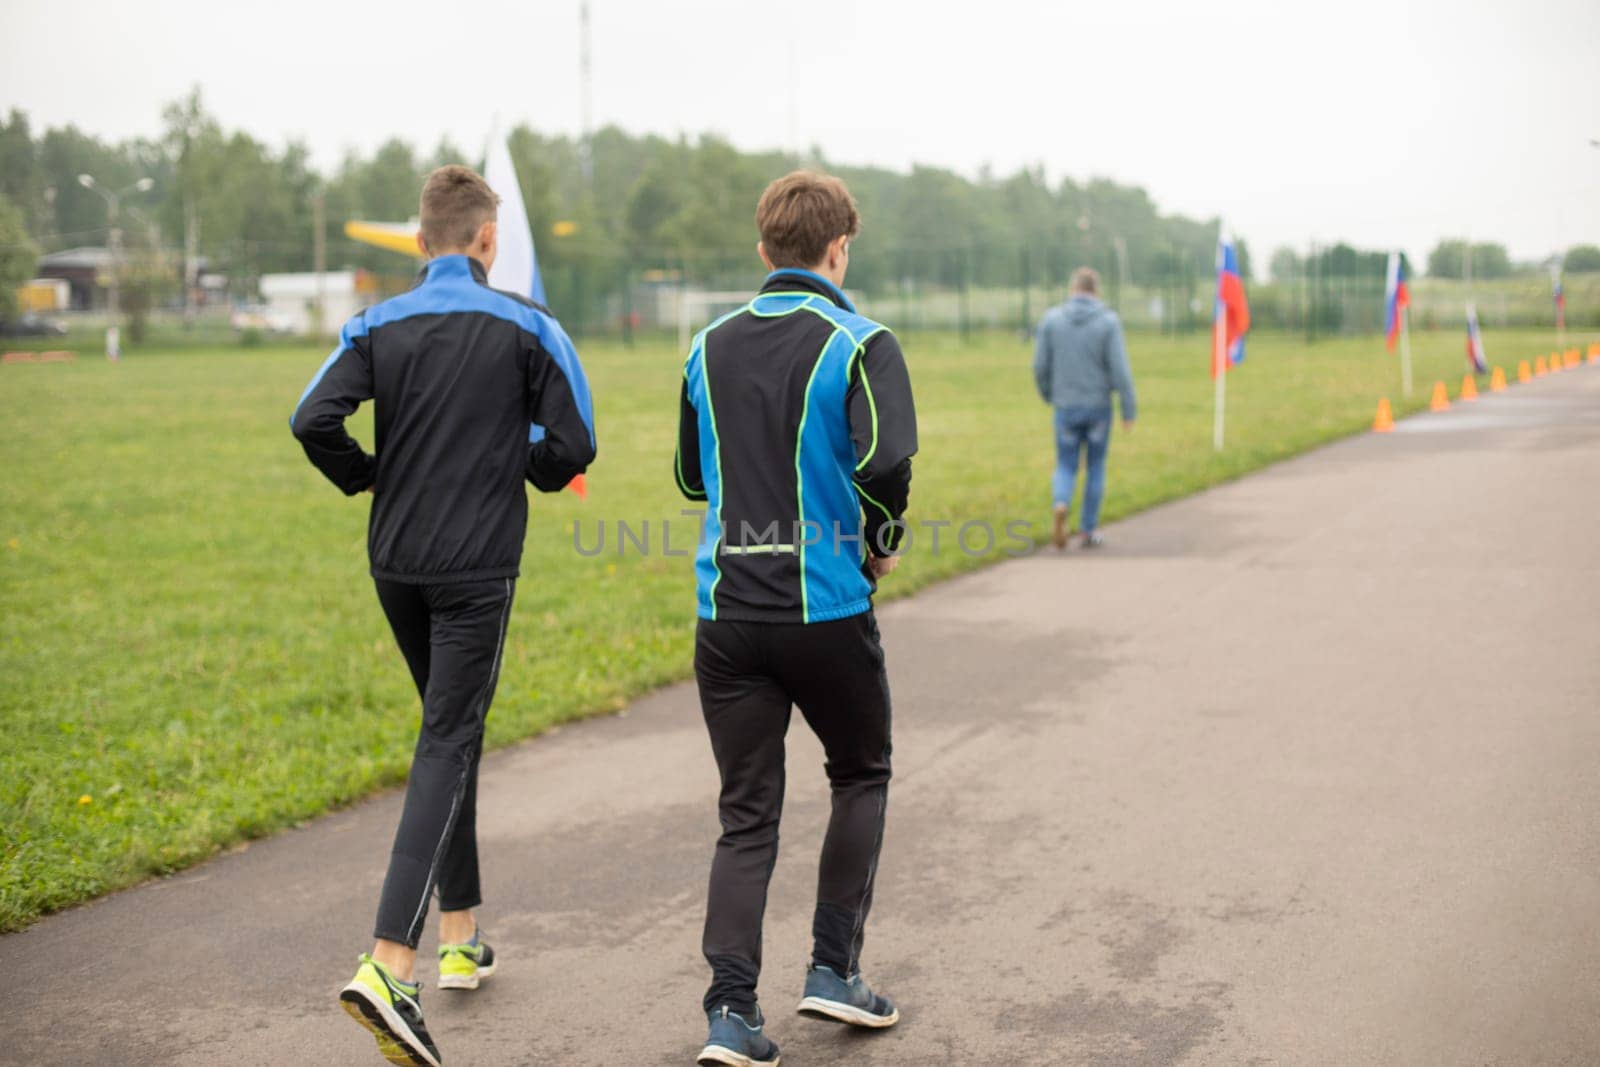 Jogging in park. Students run in stadium. by OlegKopyov